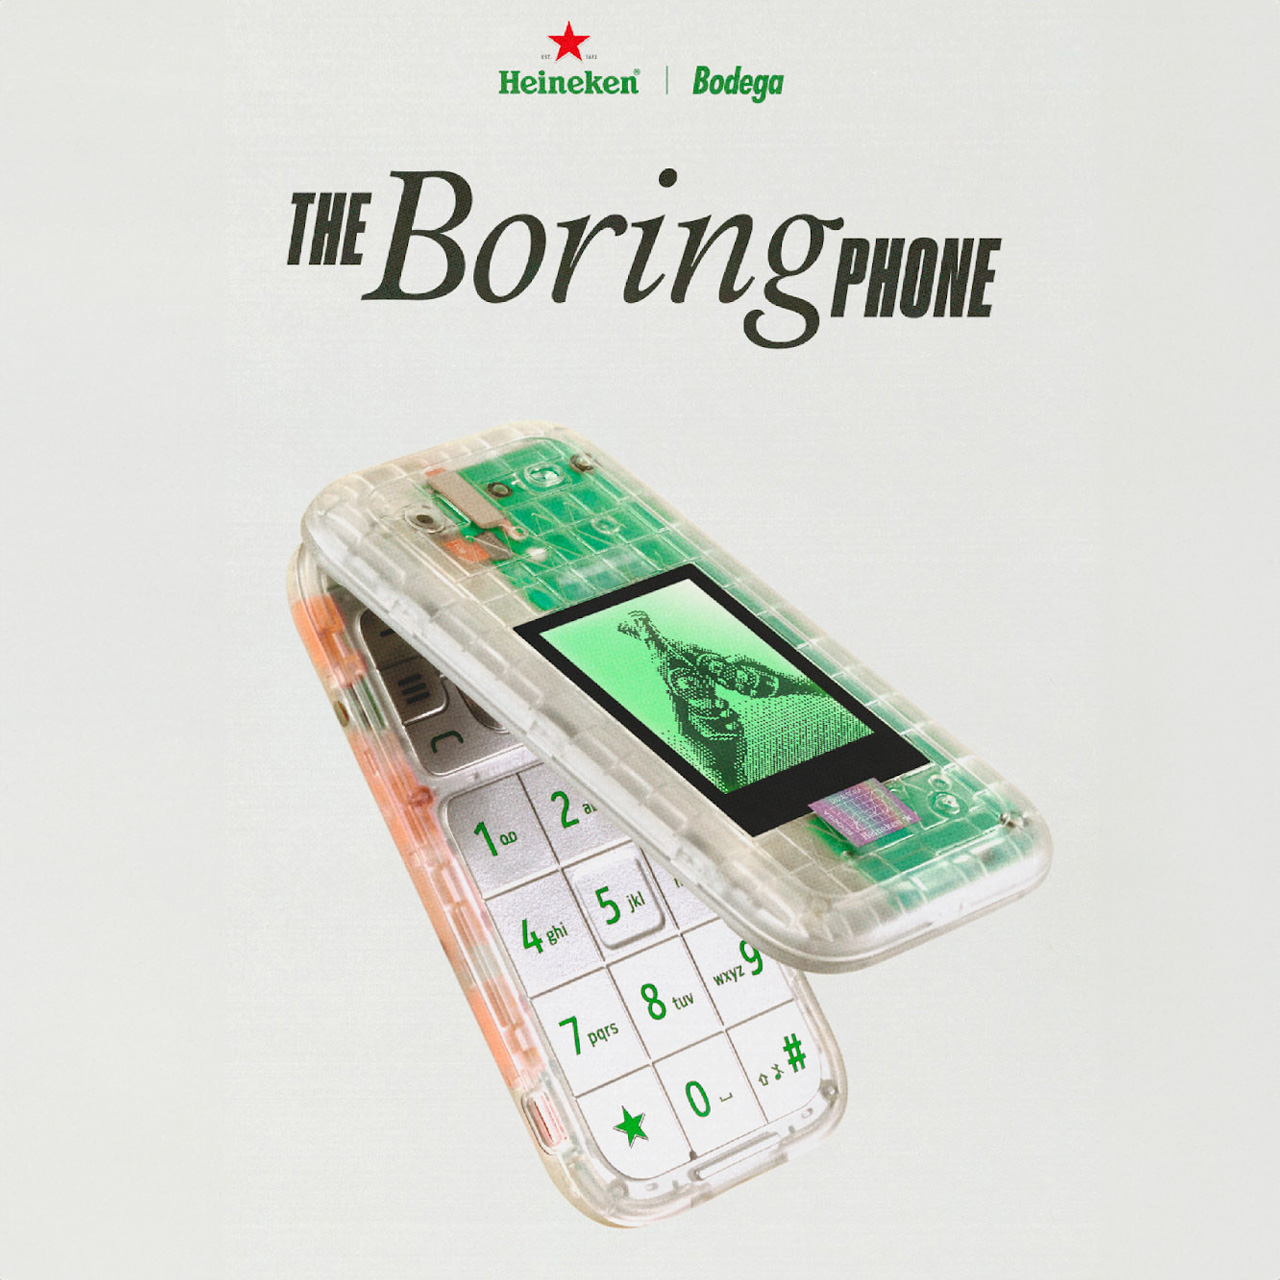 boring phone